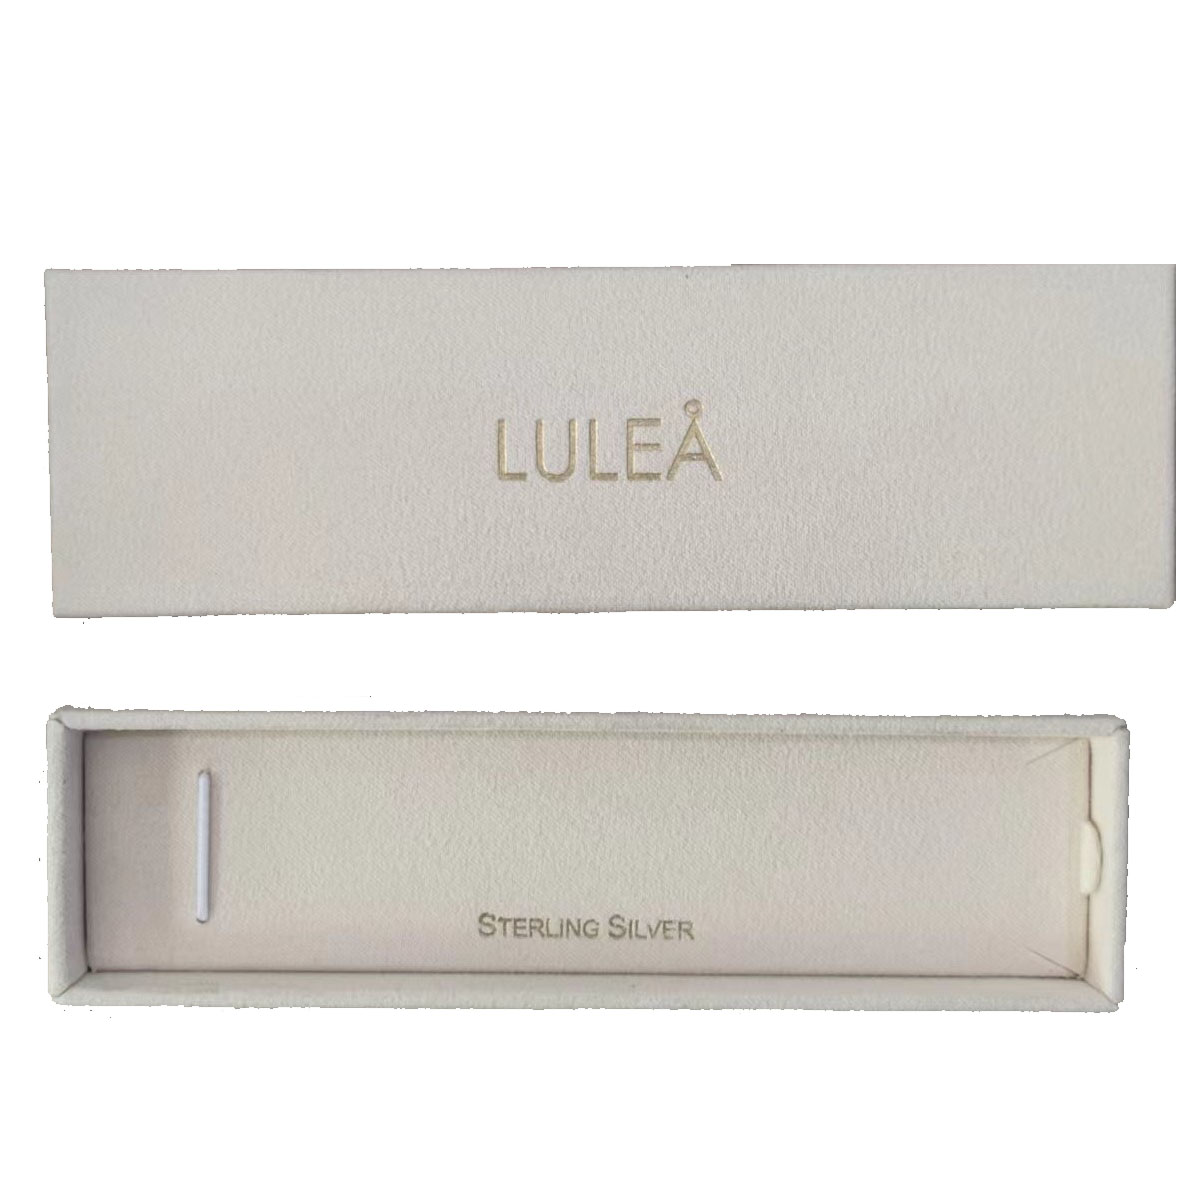 LULEA Sterling Silver 140x45x25mm Y NECK long box